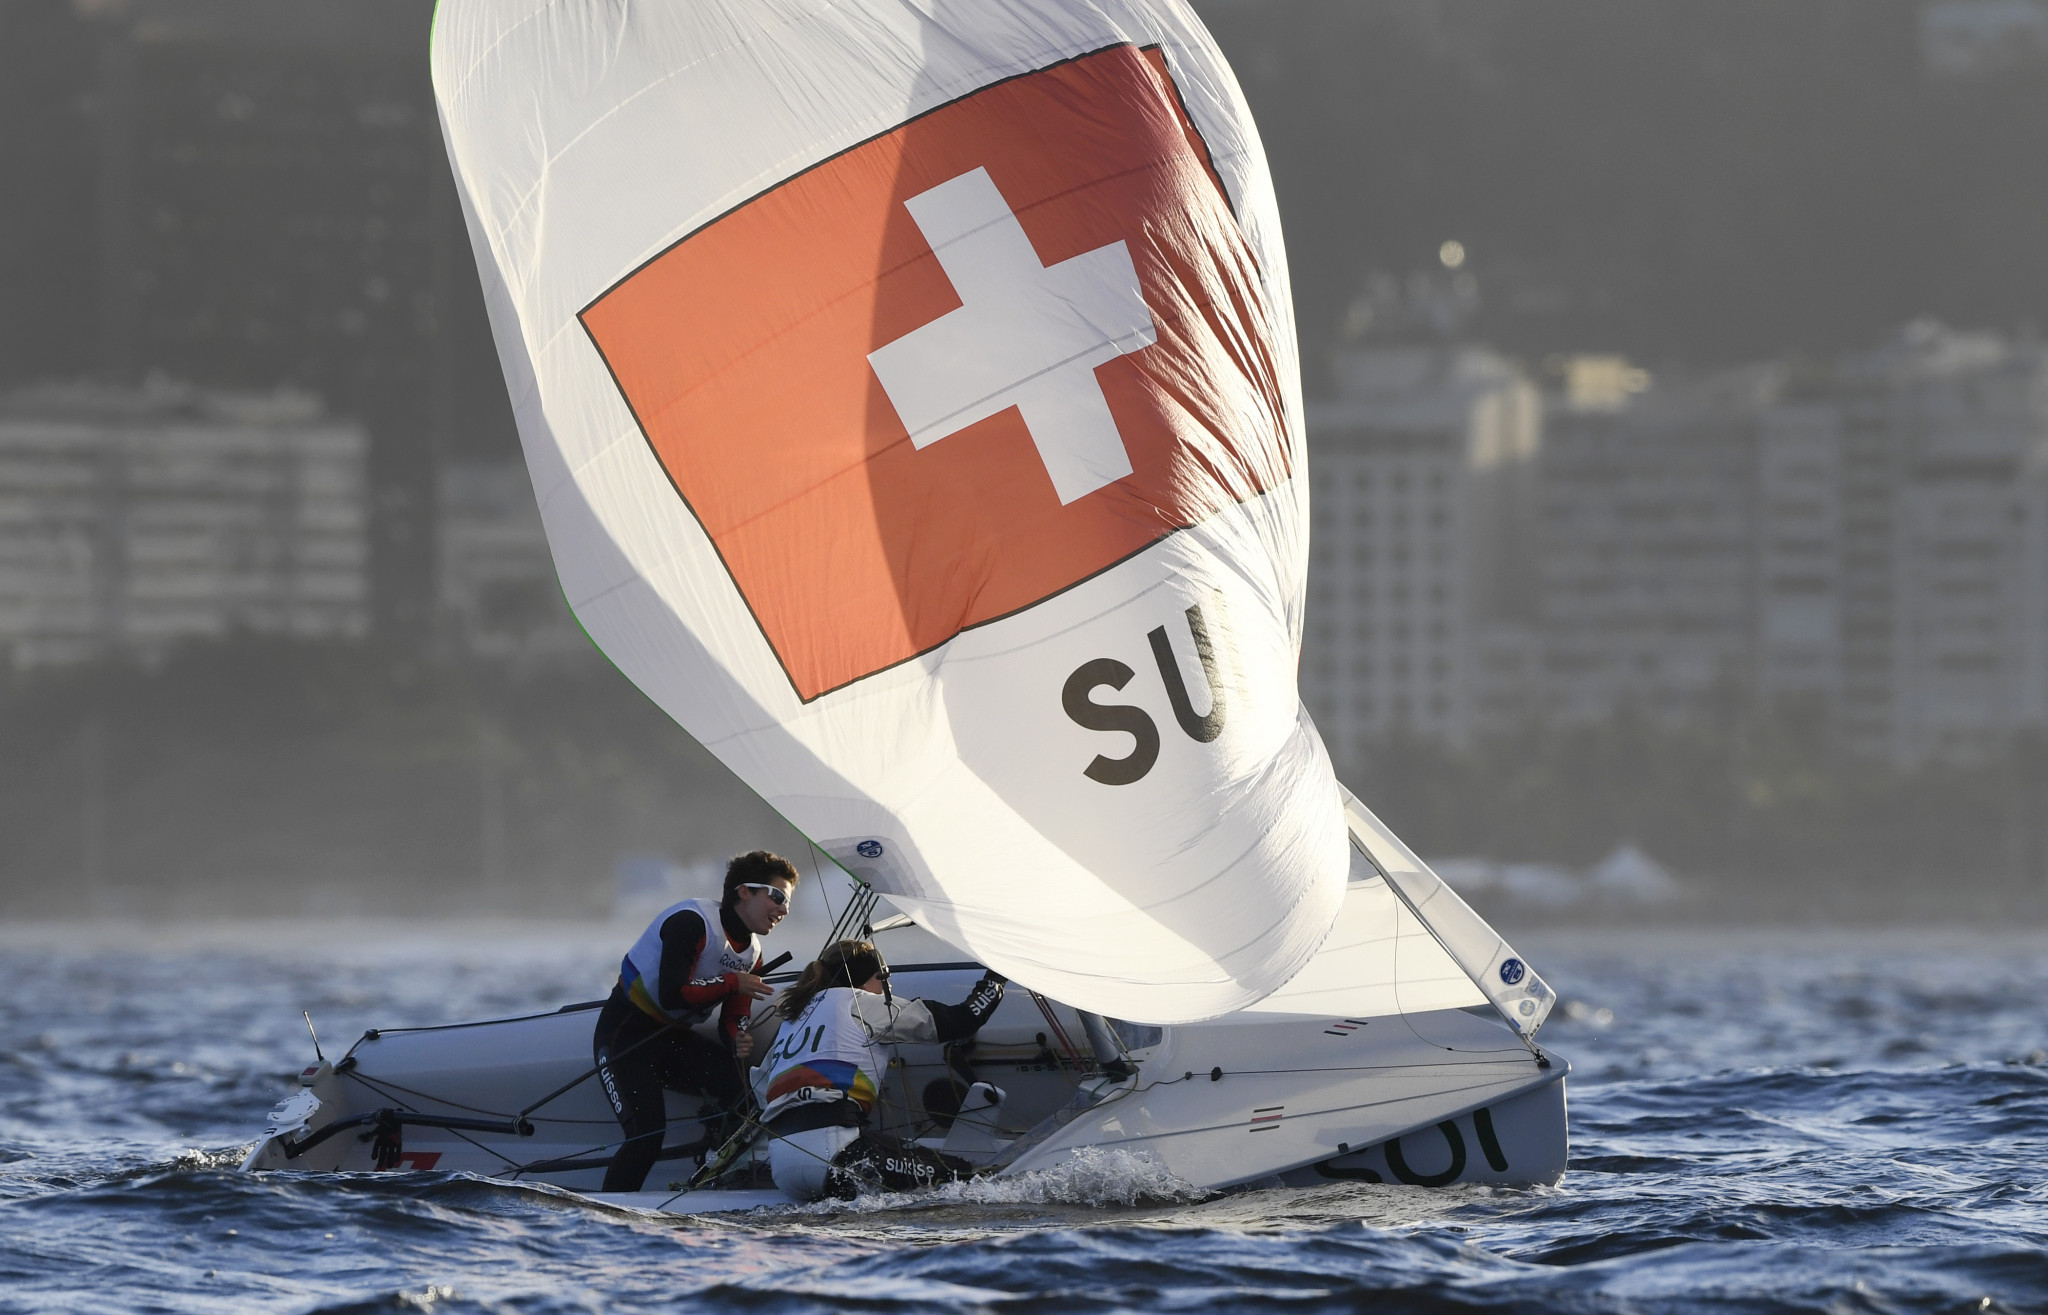 Sailors Fahrni and Siegenthaler latest athletes confirmed on Swiss team for Tokyo 2020